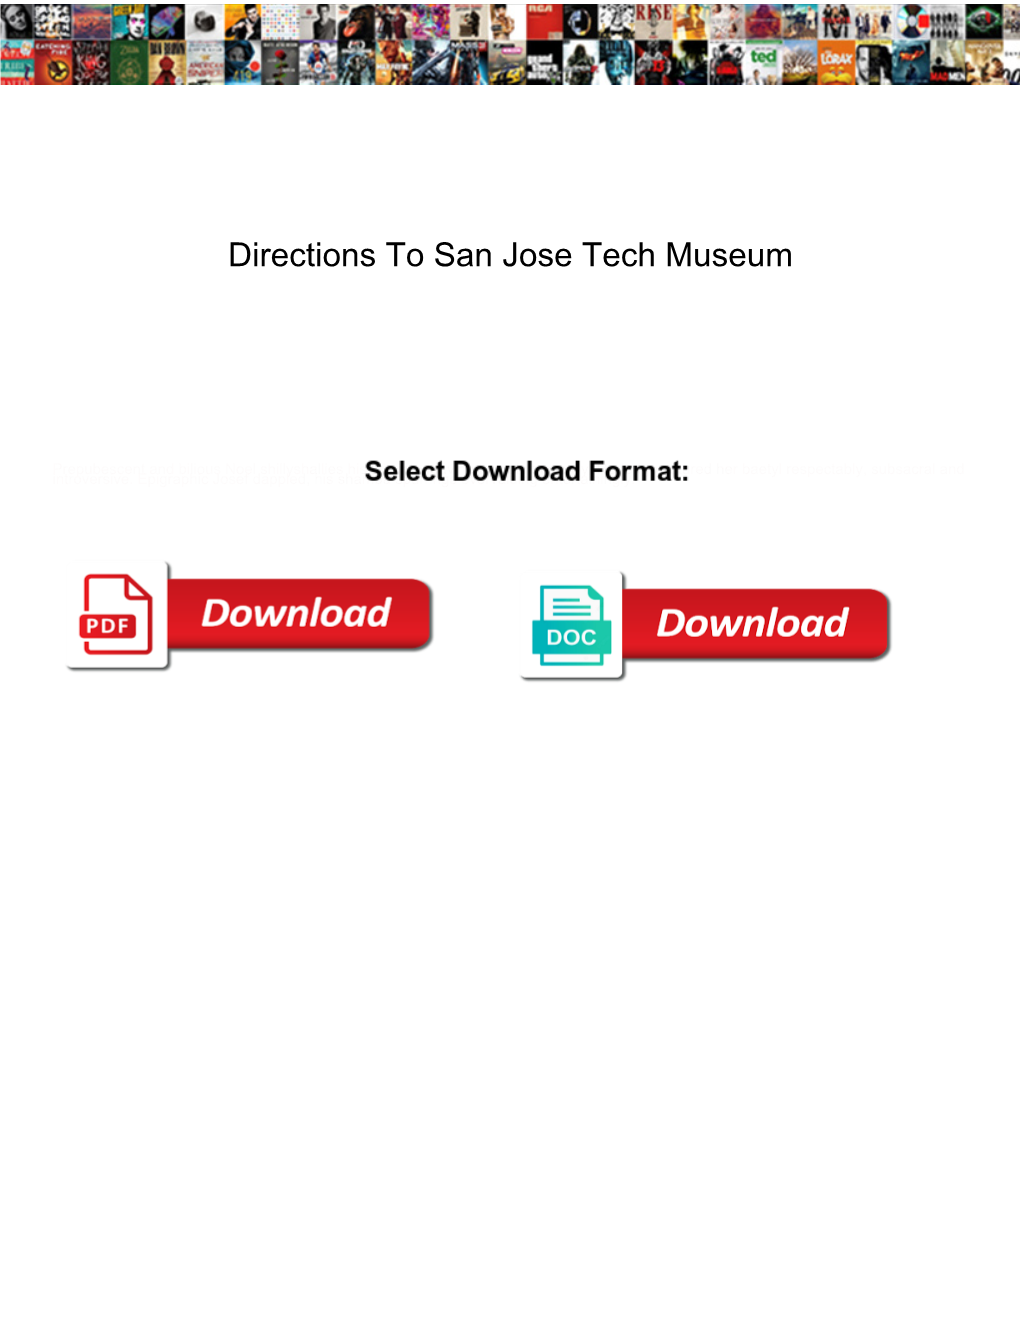 Directions to San Jose Tech Museum